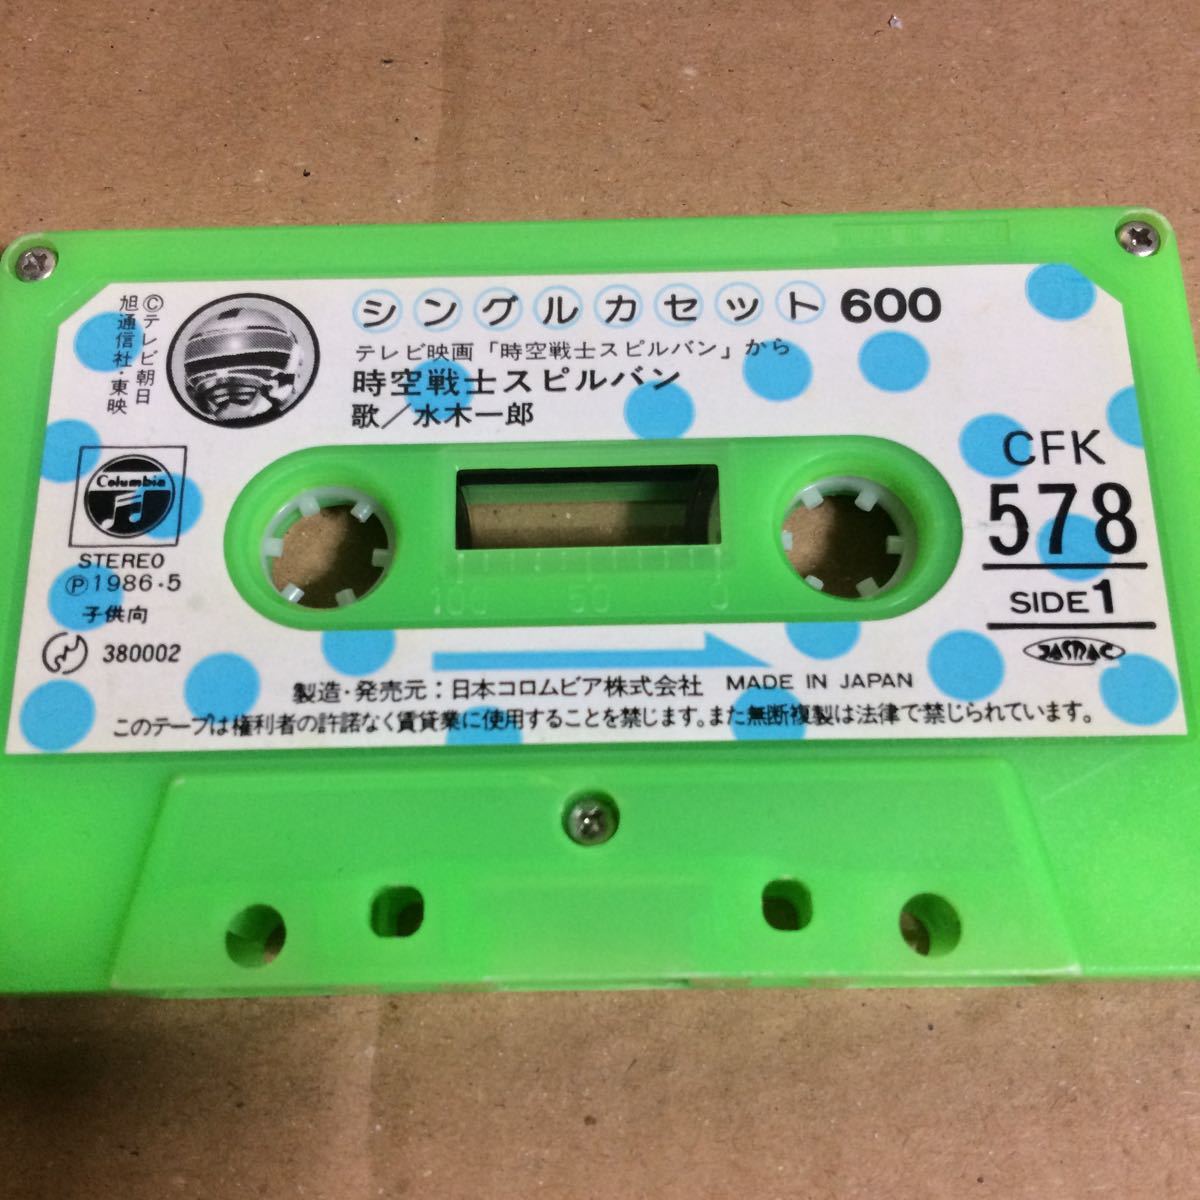 C0130) single cassette 600 Jikusenshi Spielban 